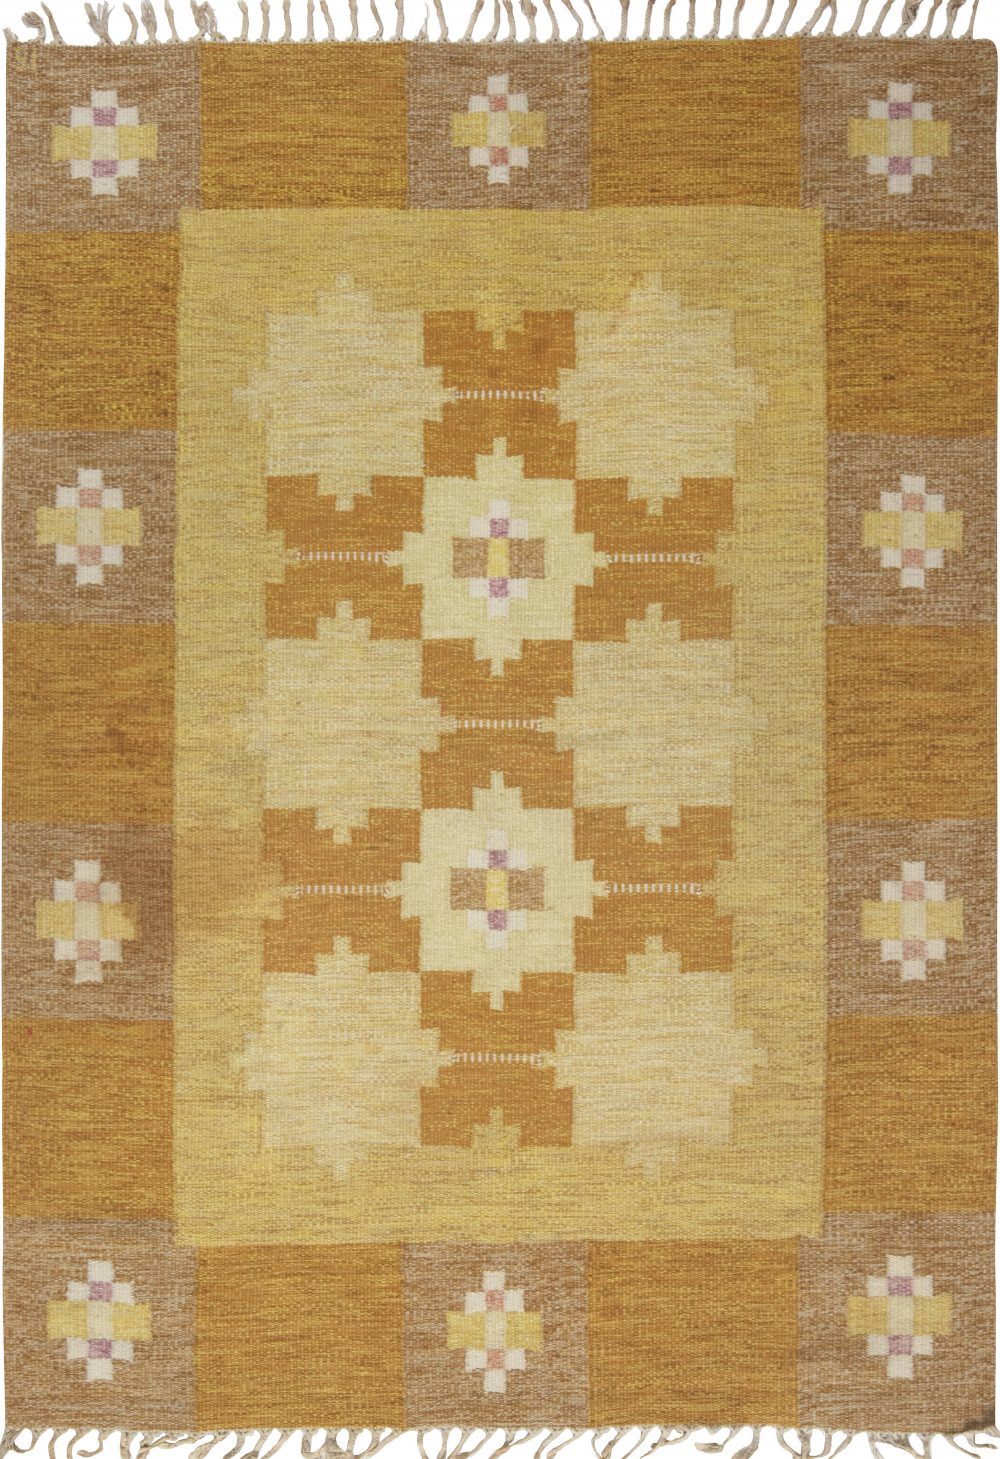 Mid-20th century Swedish Geometric Gold Yellow Amber Wool Rug by Ingegerd Silow BB6562